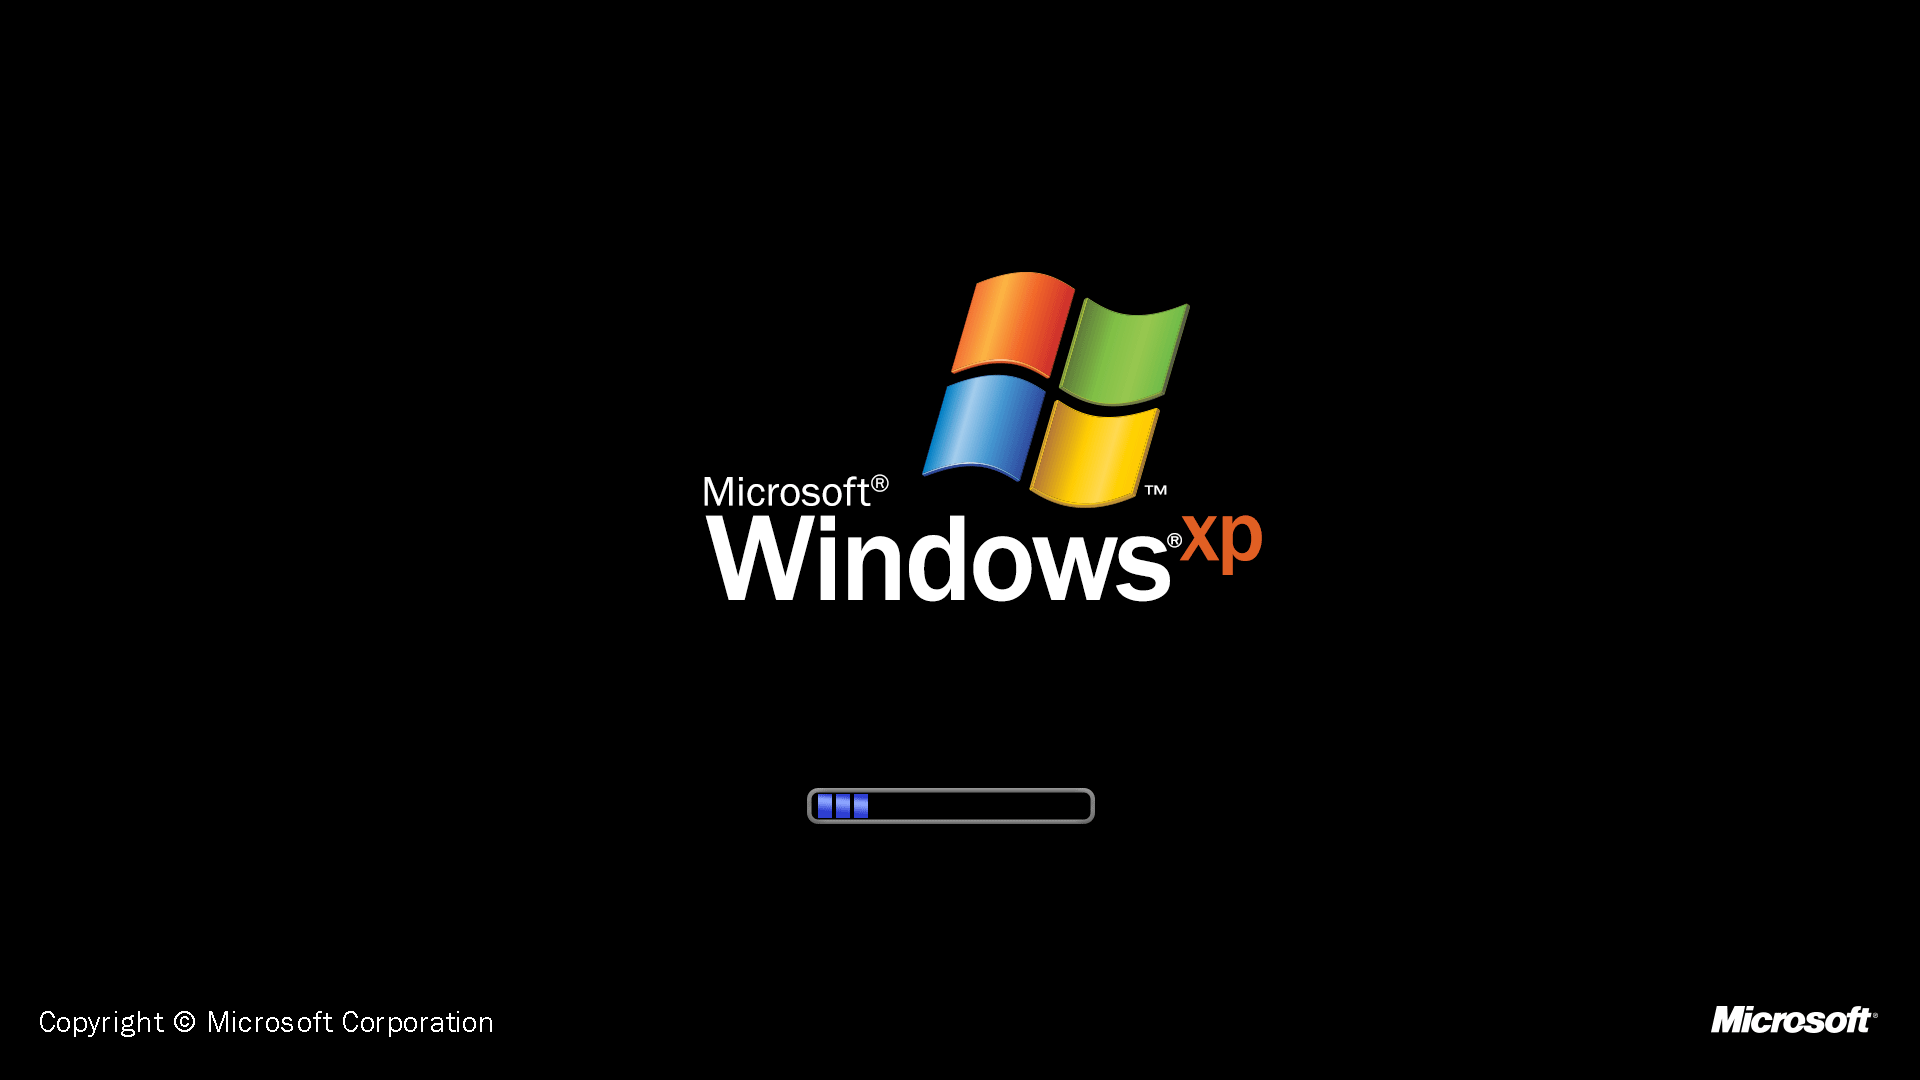 Boot screen of Windows XP